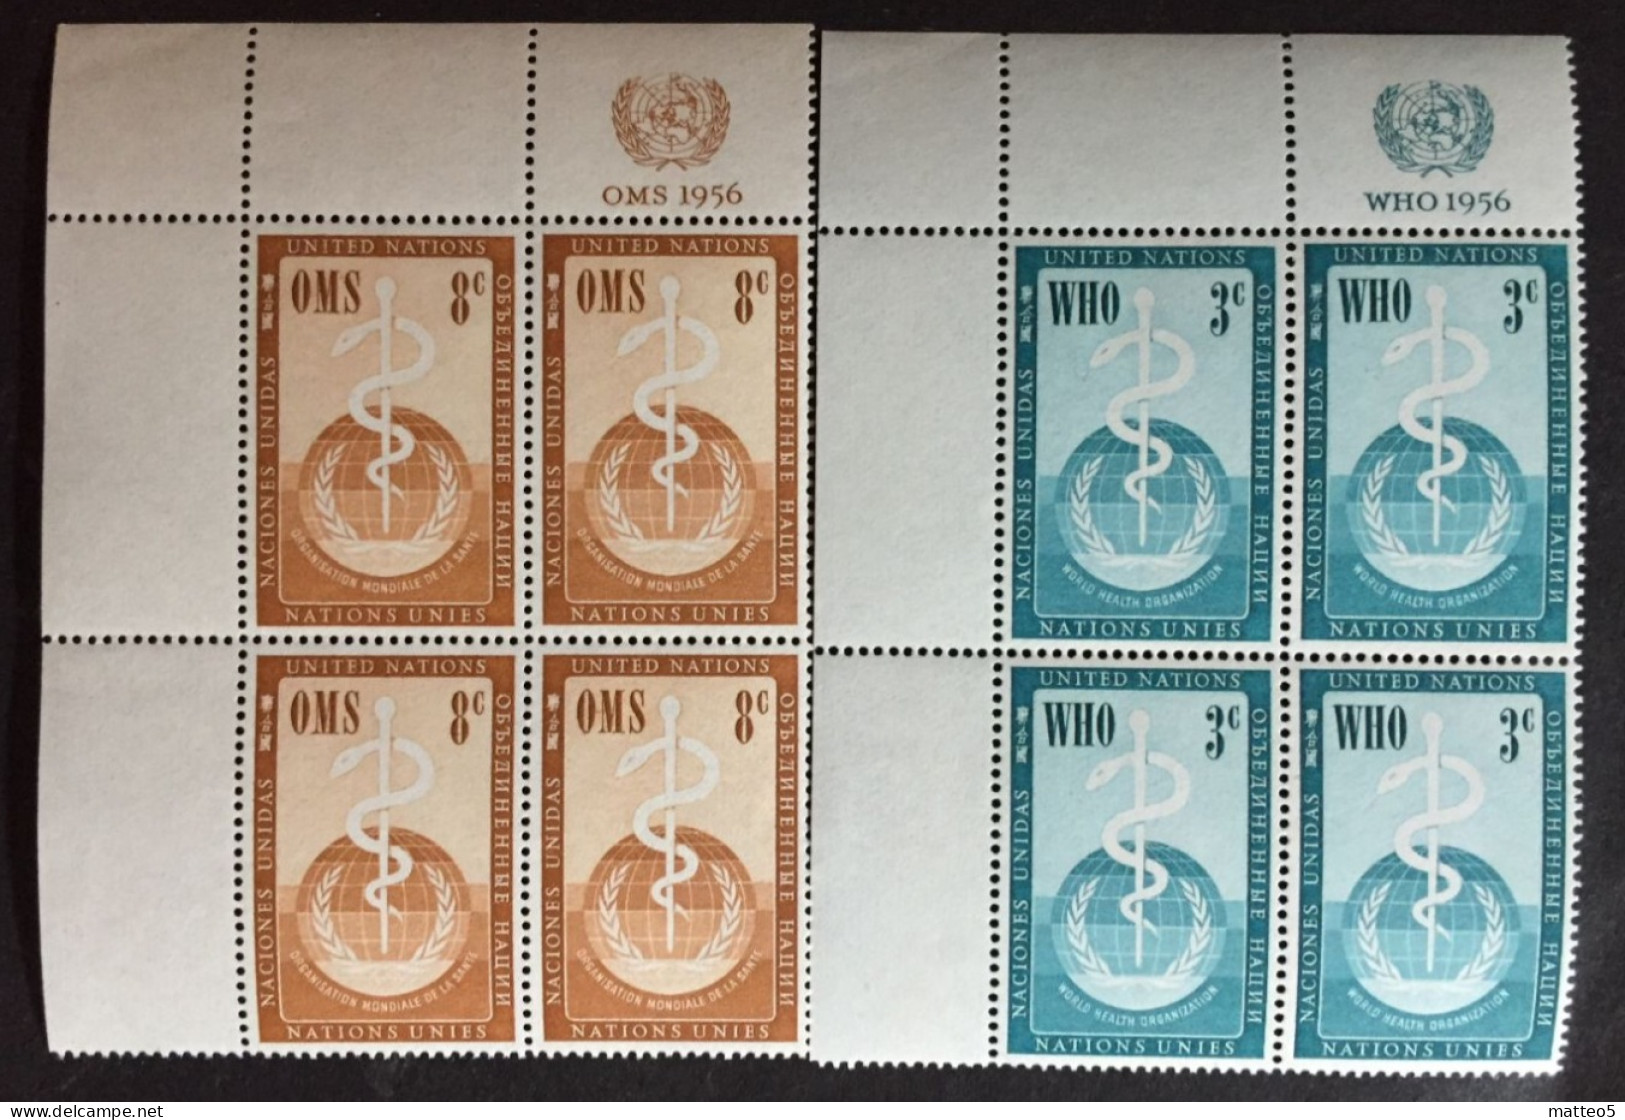 1955 - United Nations UNO UN - W.H.O. - OMS - World Heath Organization - Aesculapian Staff - 2x4 Stamps Unused - Nuovi